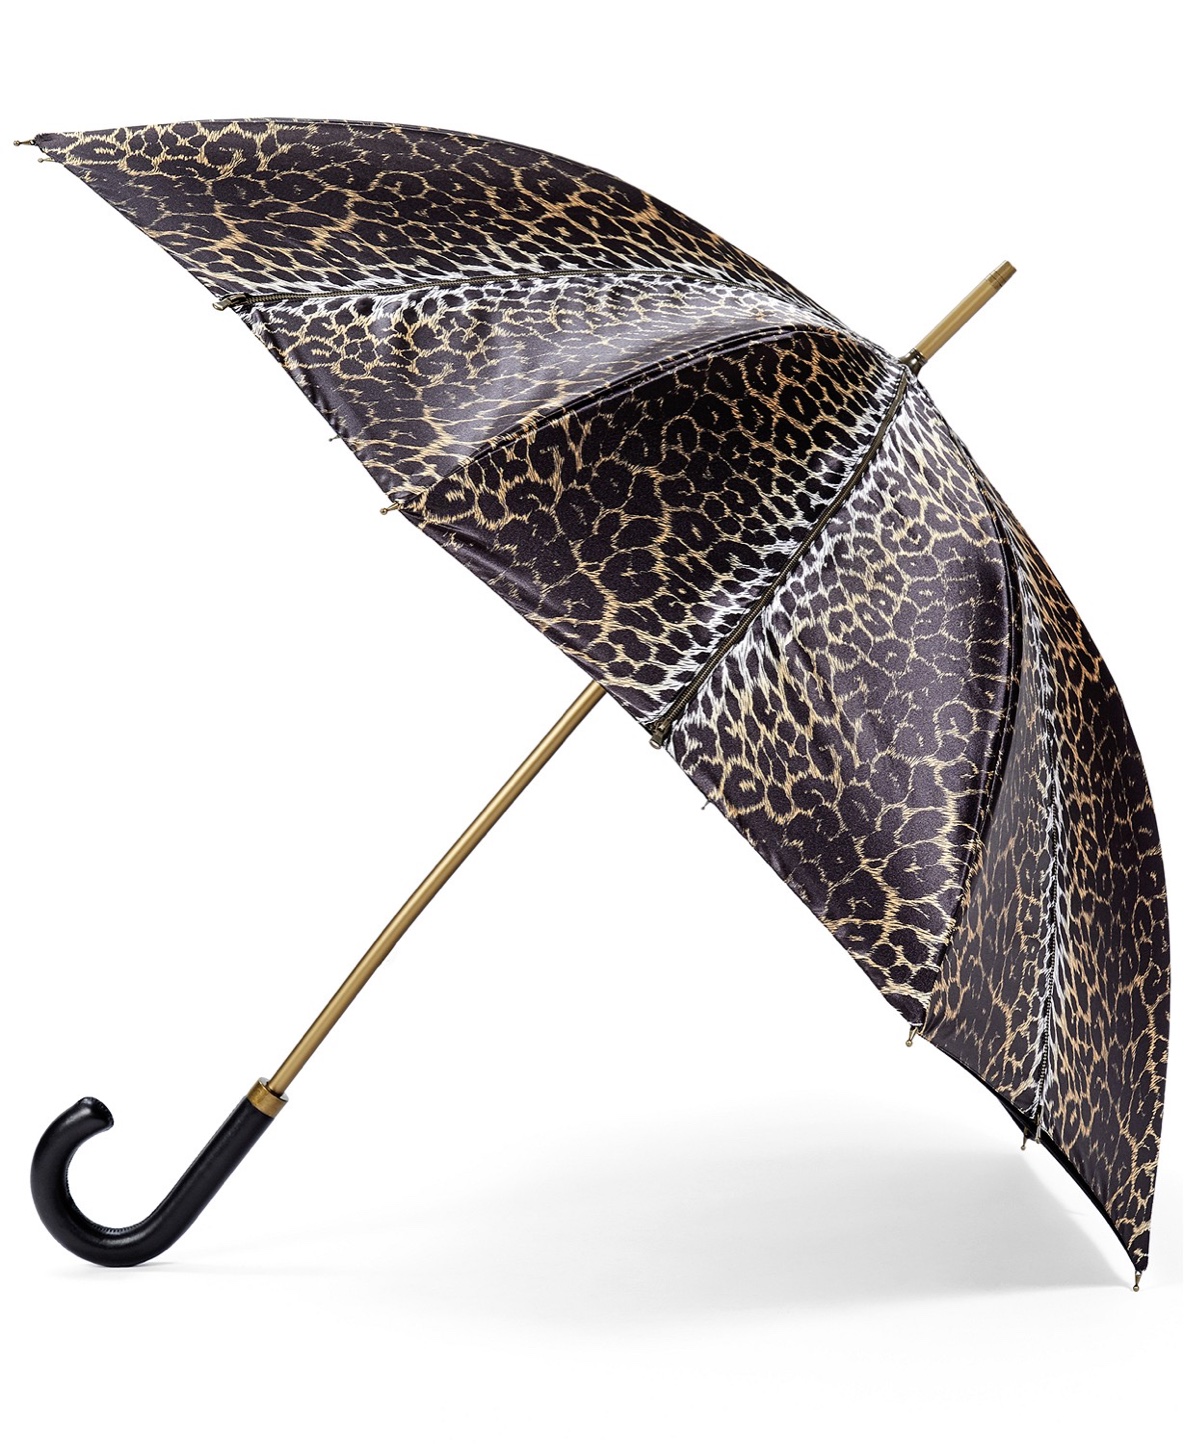 London Fog Jeremy Scott Stick Umbrella $60